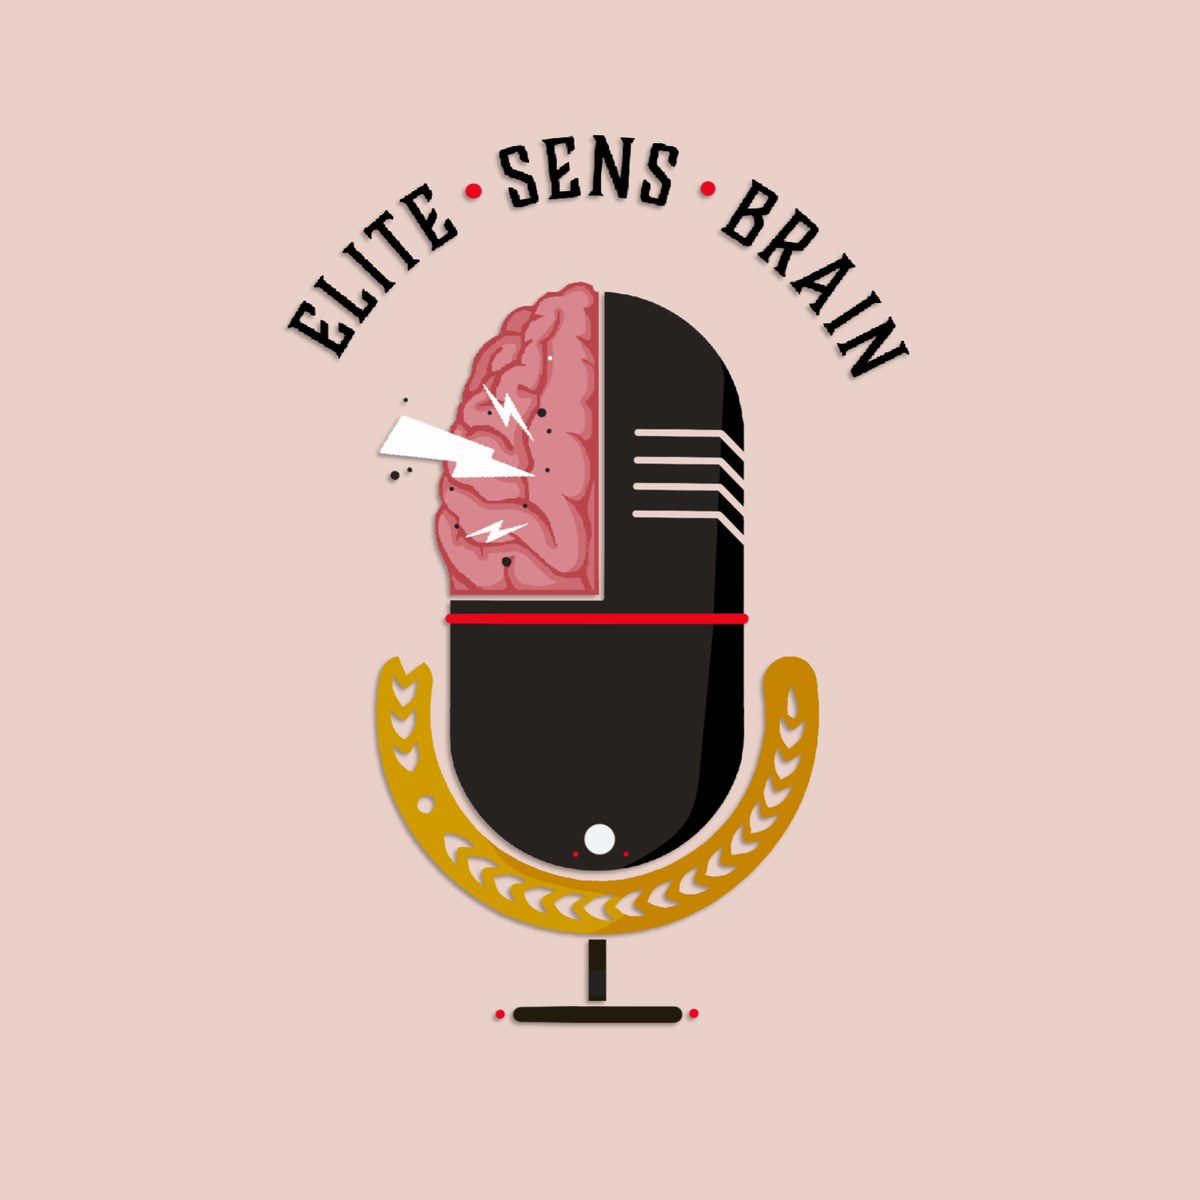 Elite Sens Brain, Episode 22: Hating Too Close To The Sun